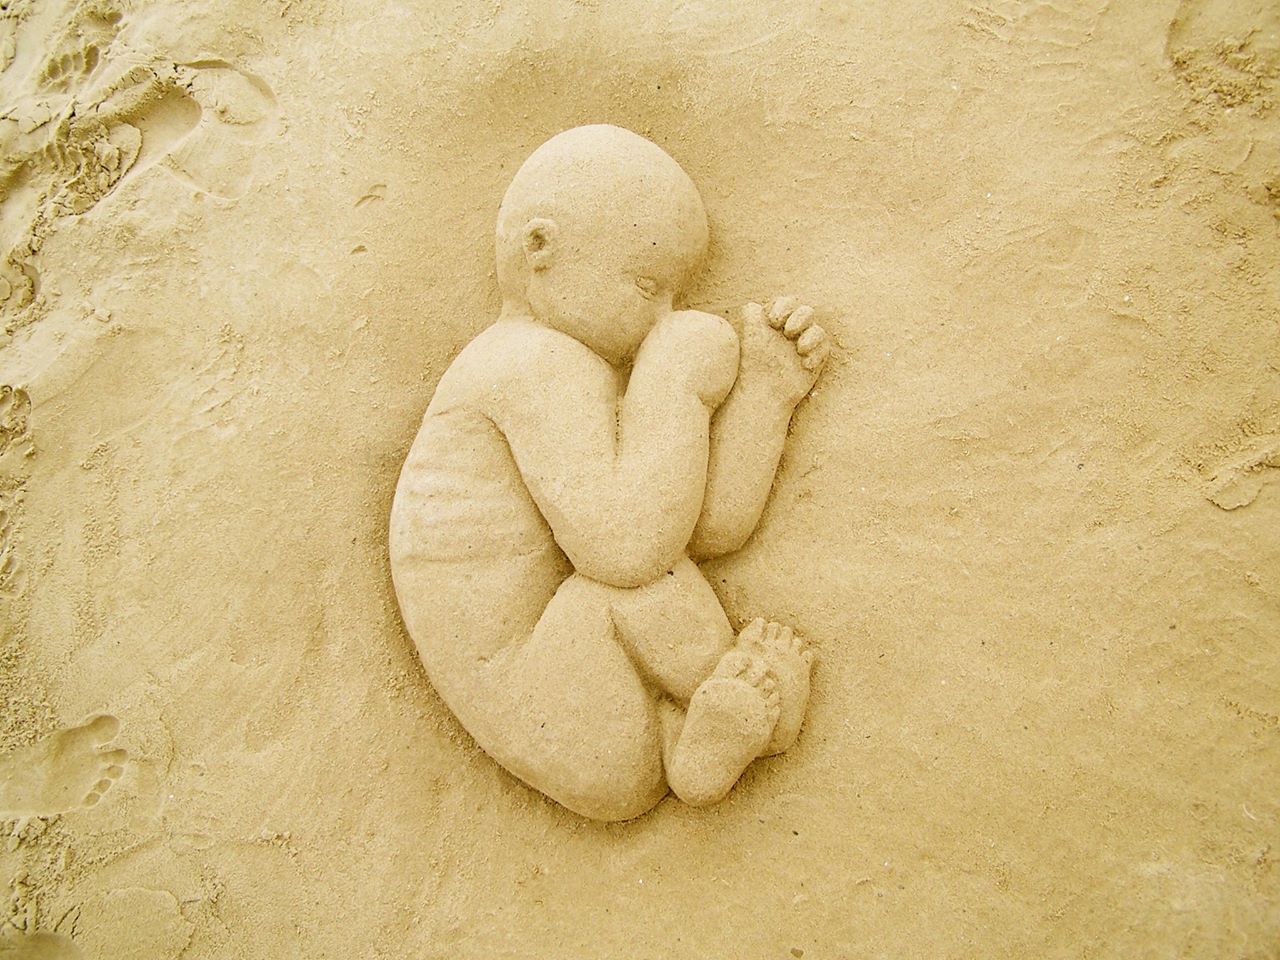 Epic Sand Sculptures